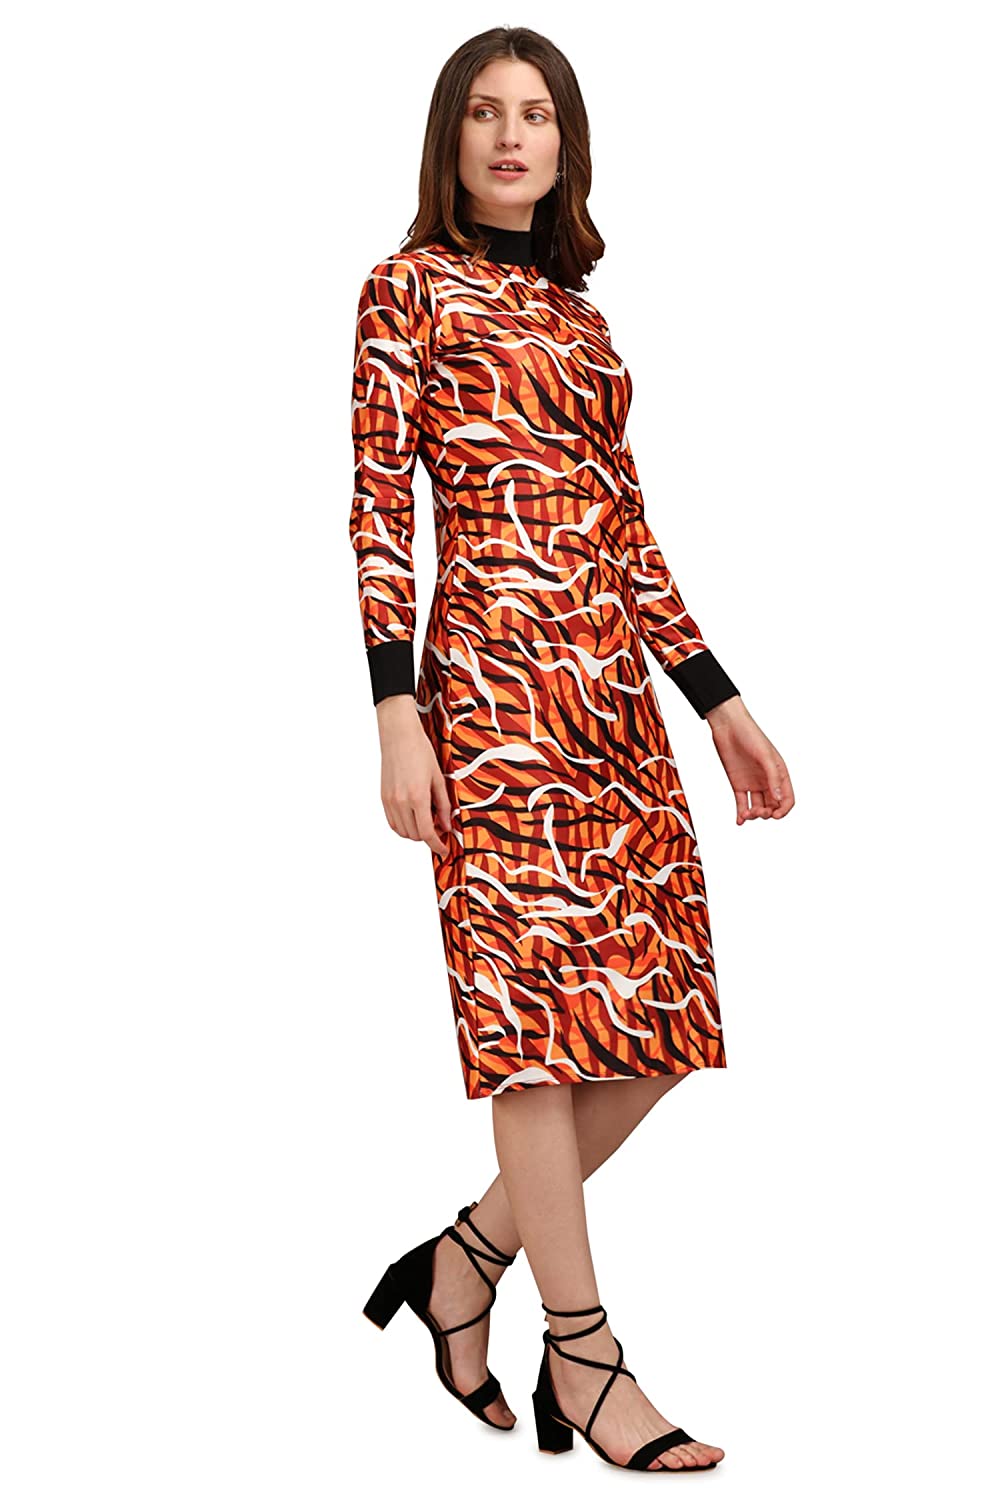 PURVAJA Women’s Bodycon Knee Length Dress -  Dresses in Sri Lanka from Arcade Online Shopping - Just Rs. 4699!